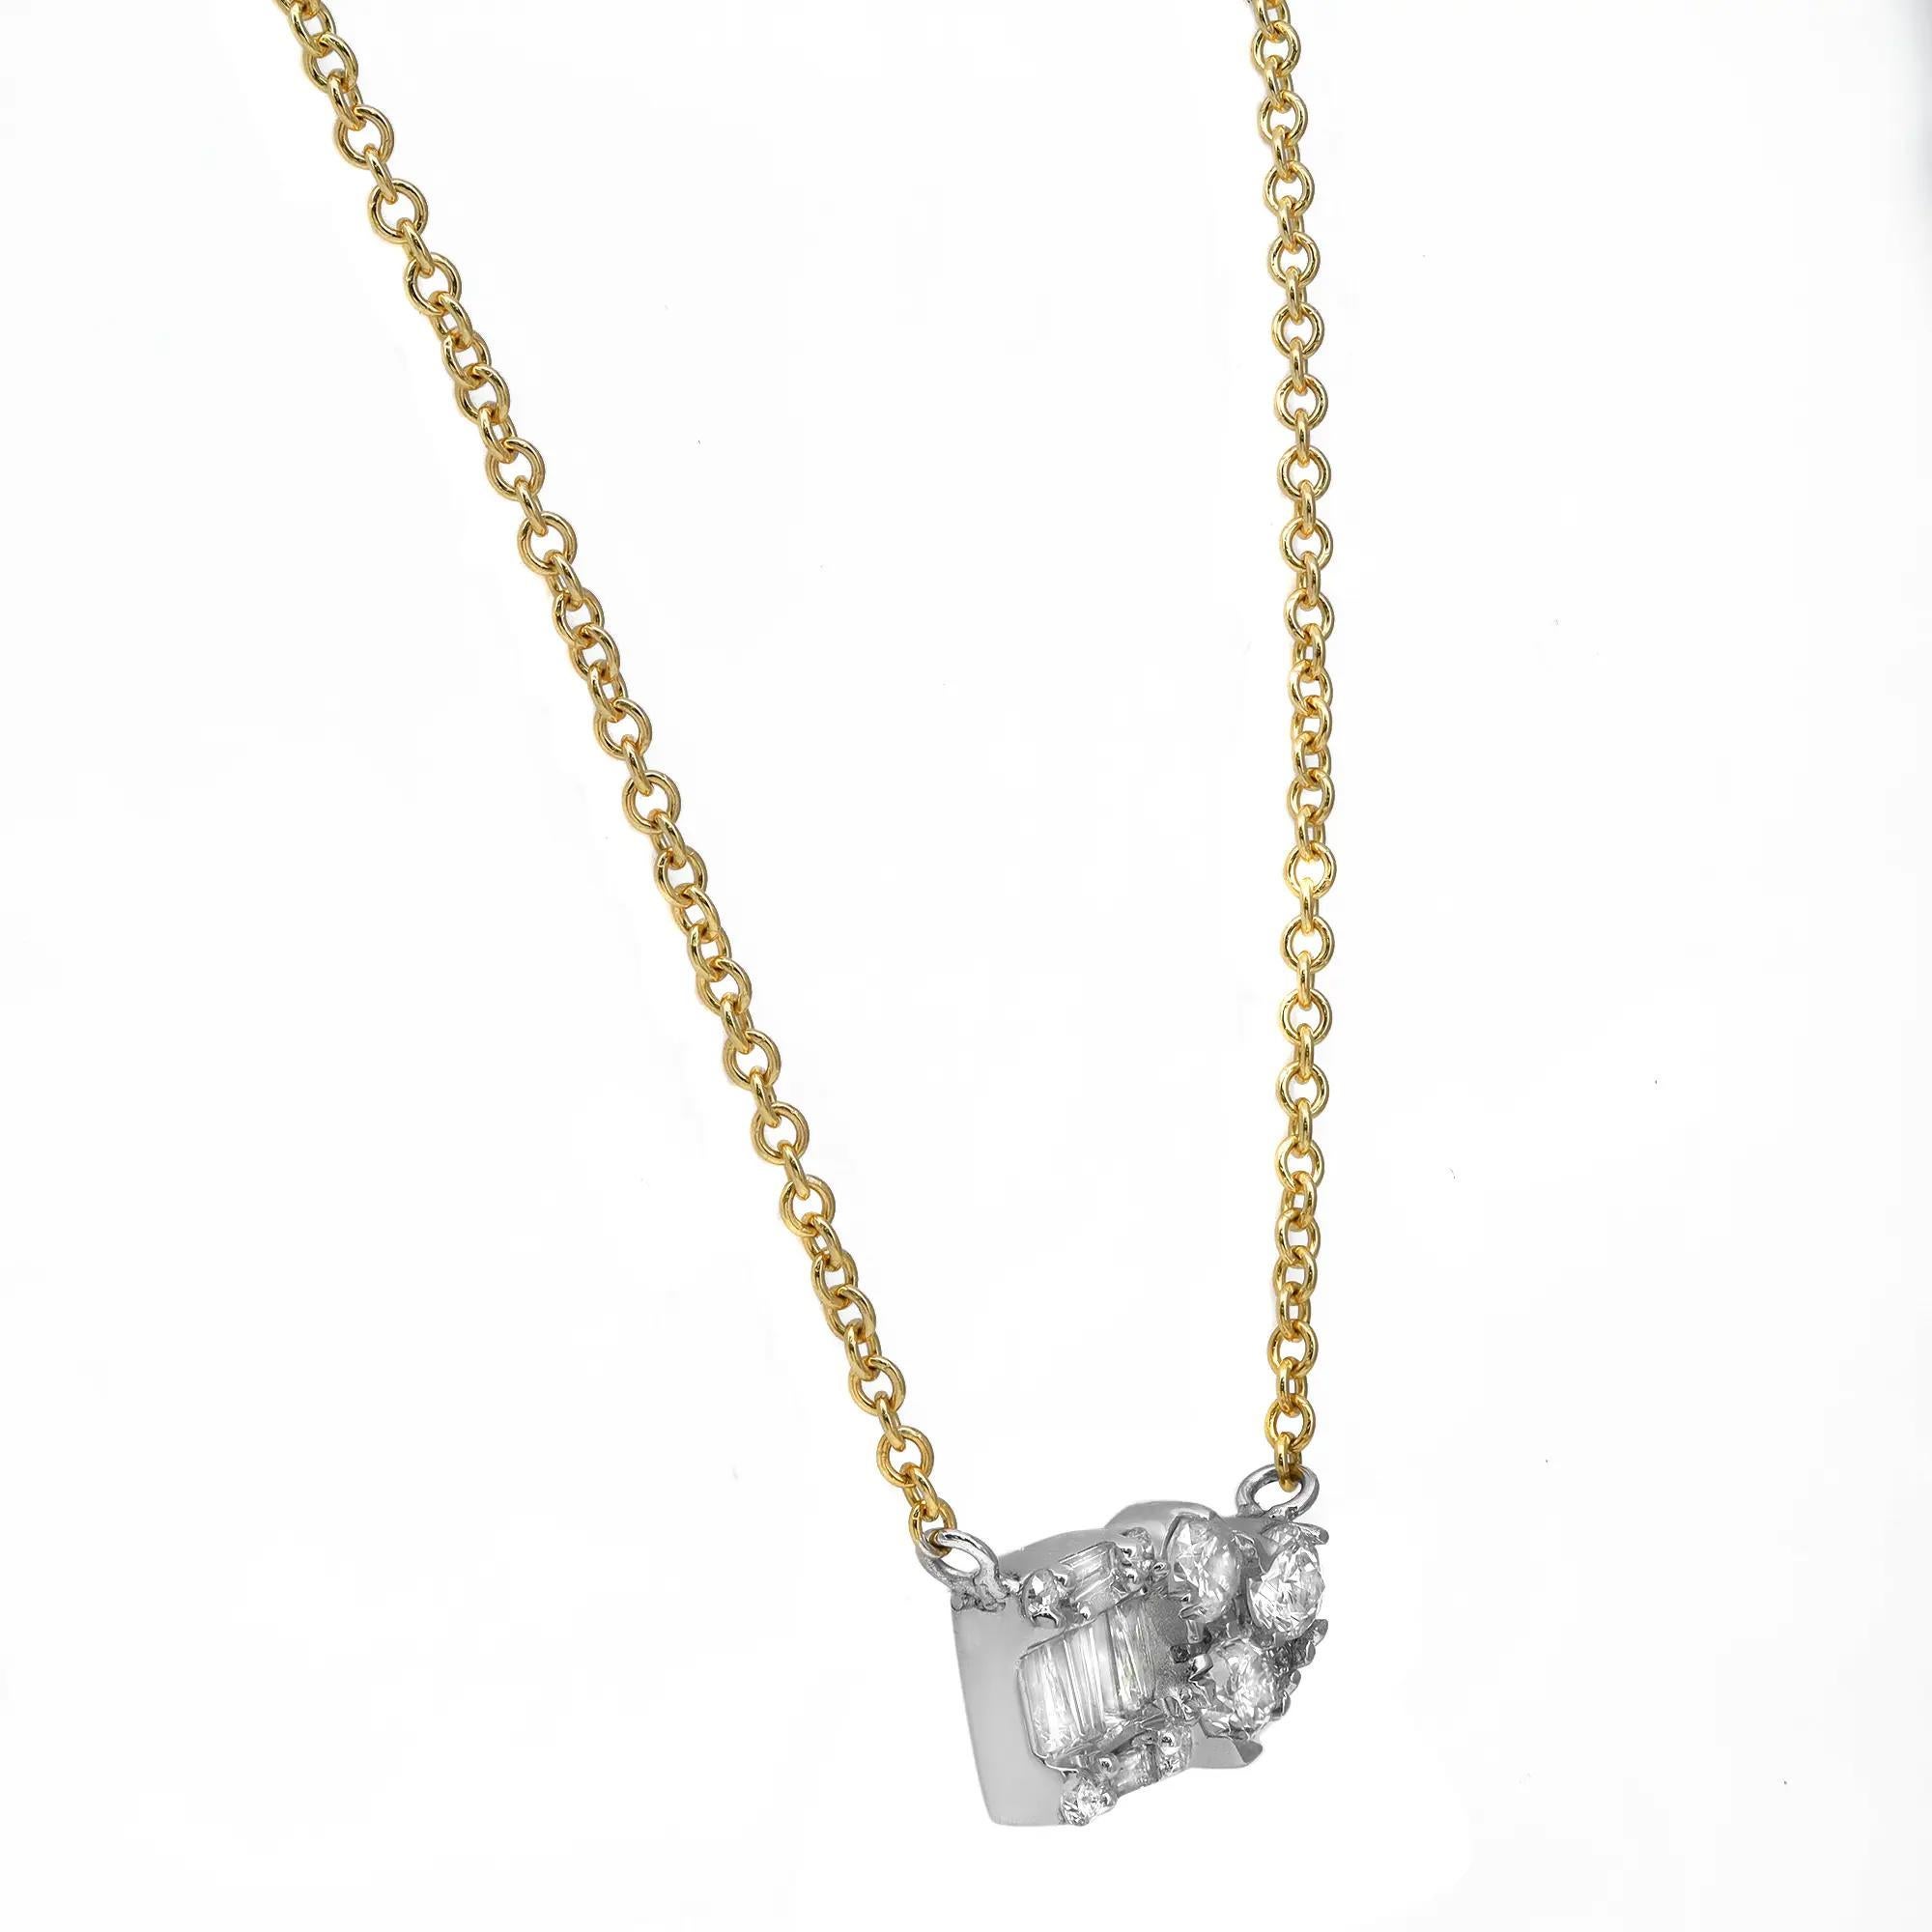 Baguette Cut Baguette And Round Cut Diamond Pendant Necklace 14K Yellow Gold 0.45Cttw For Sale